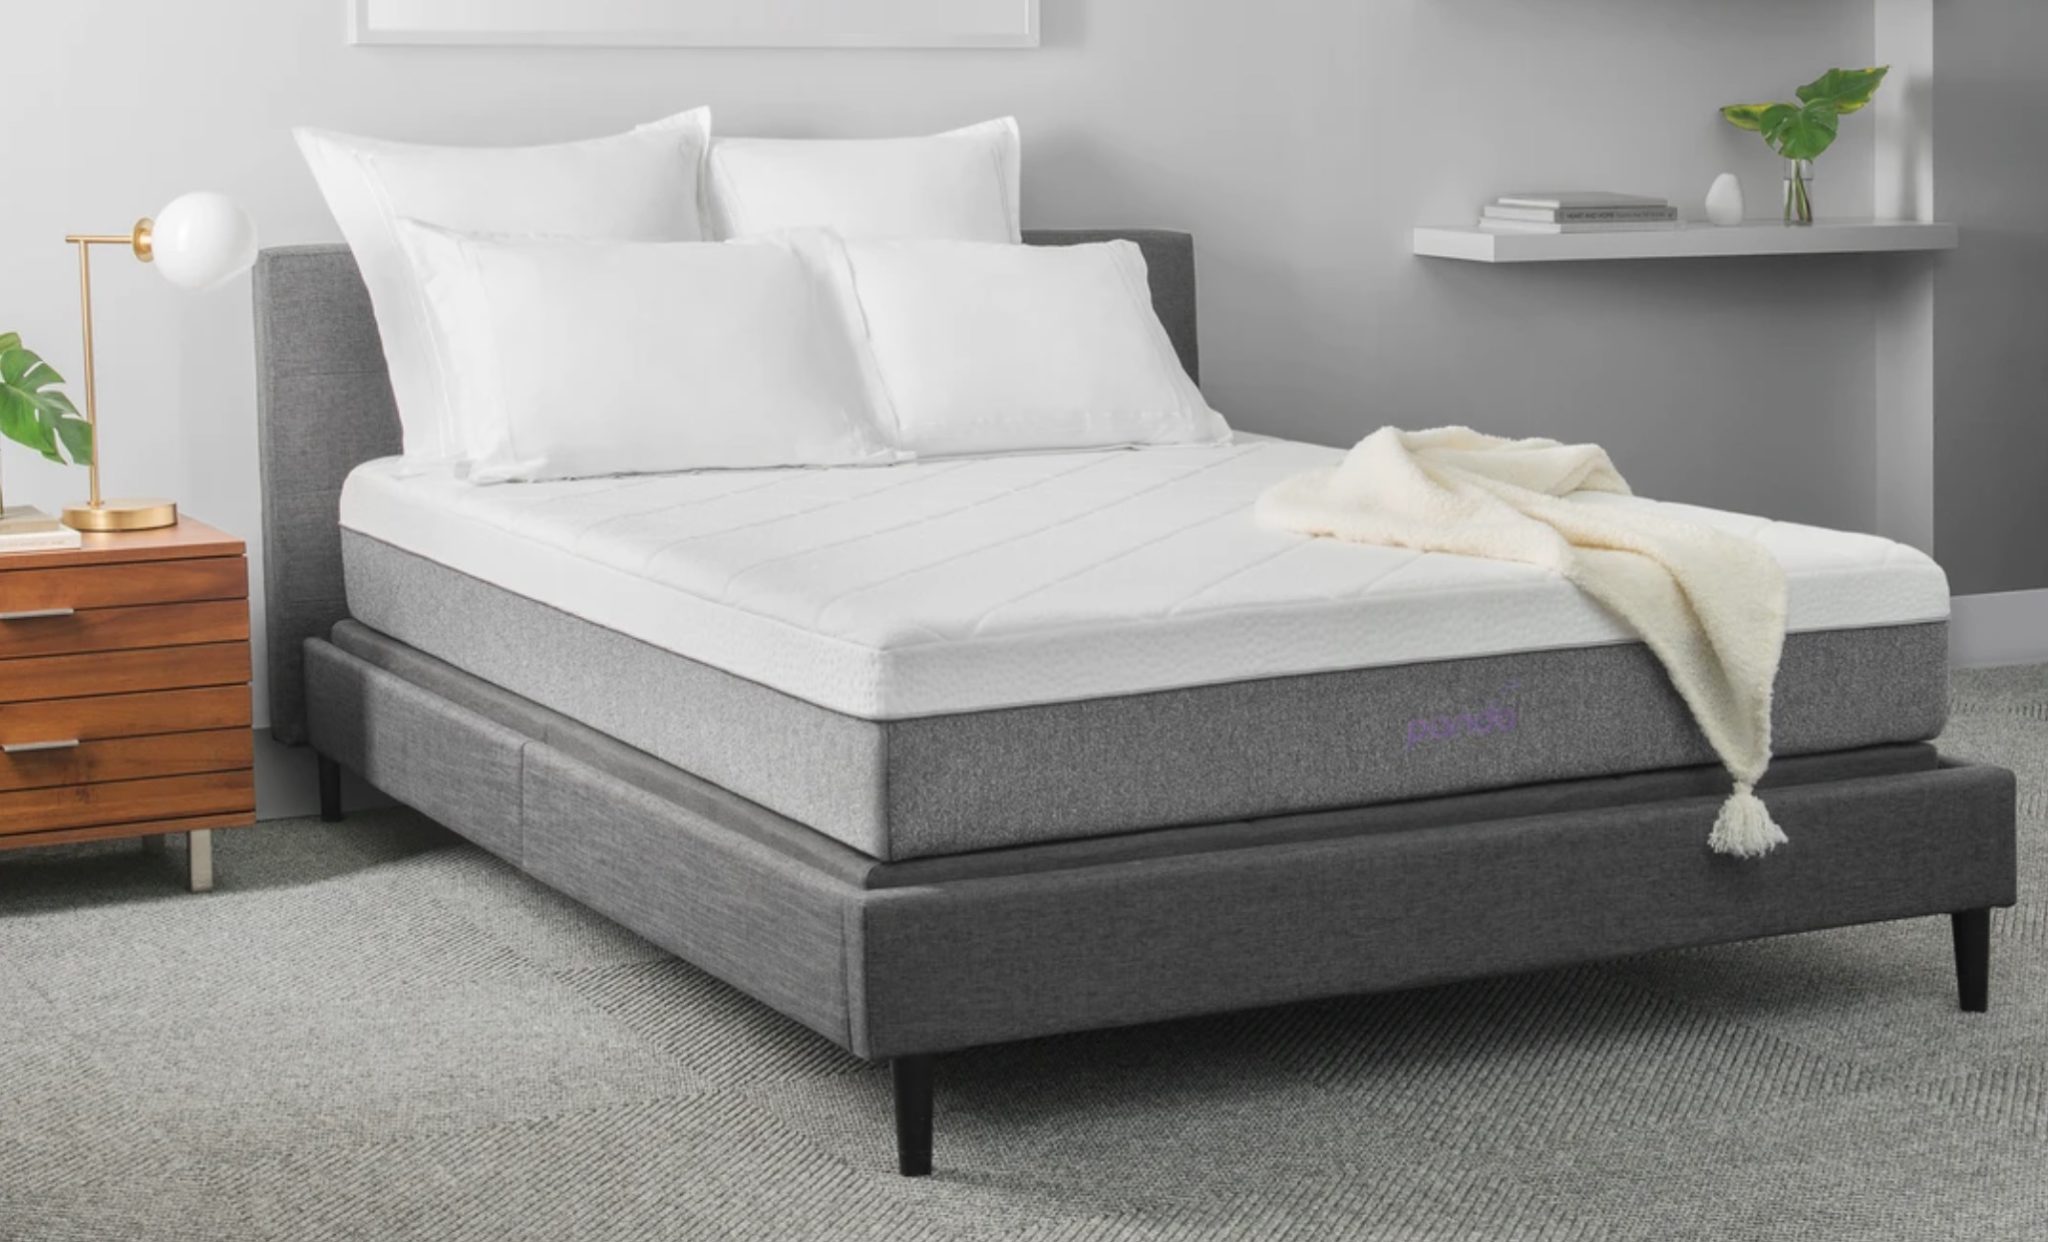 best affordable memory foam mattress to buy online